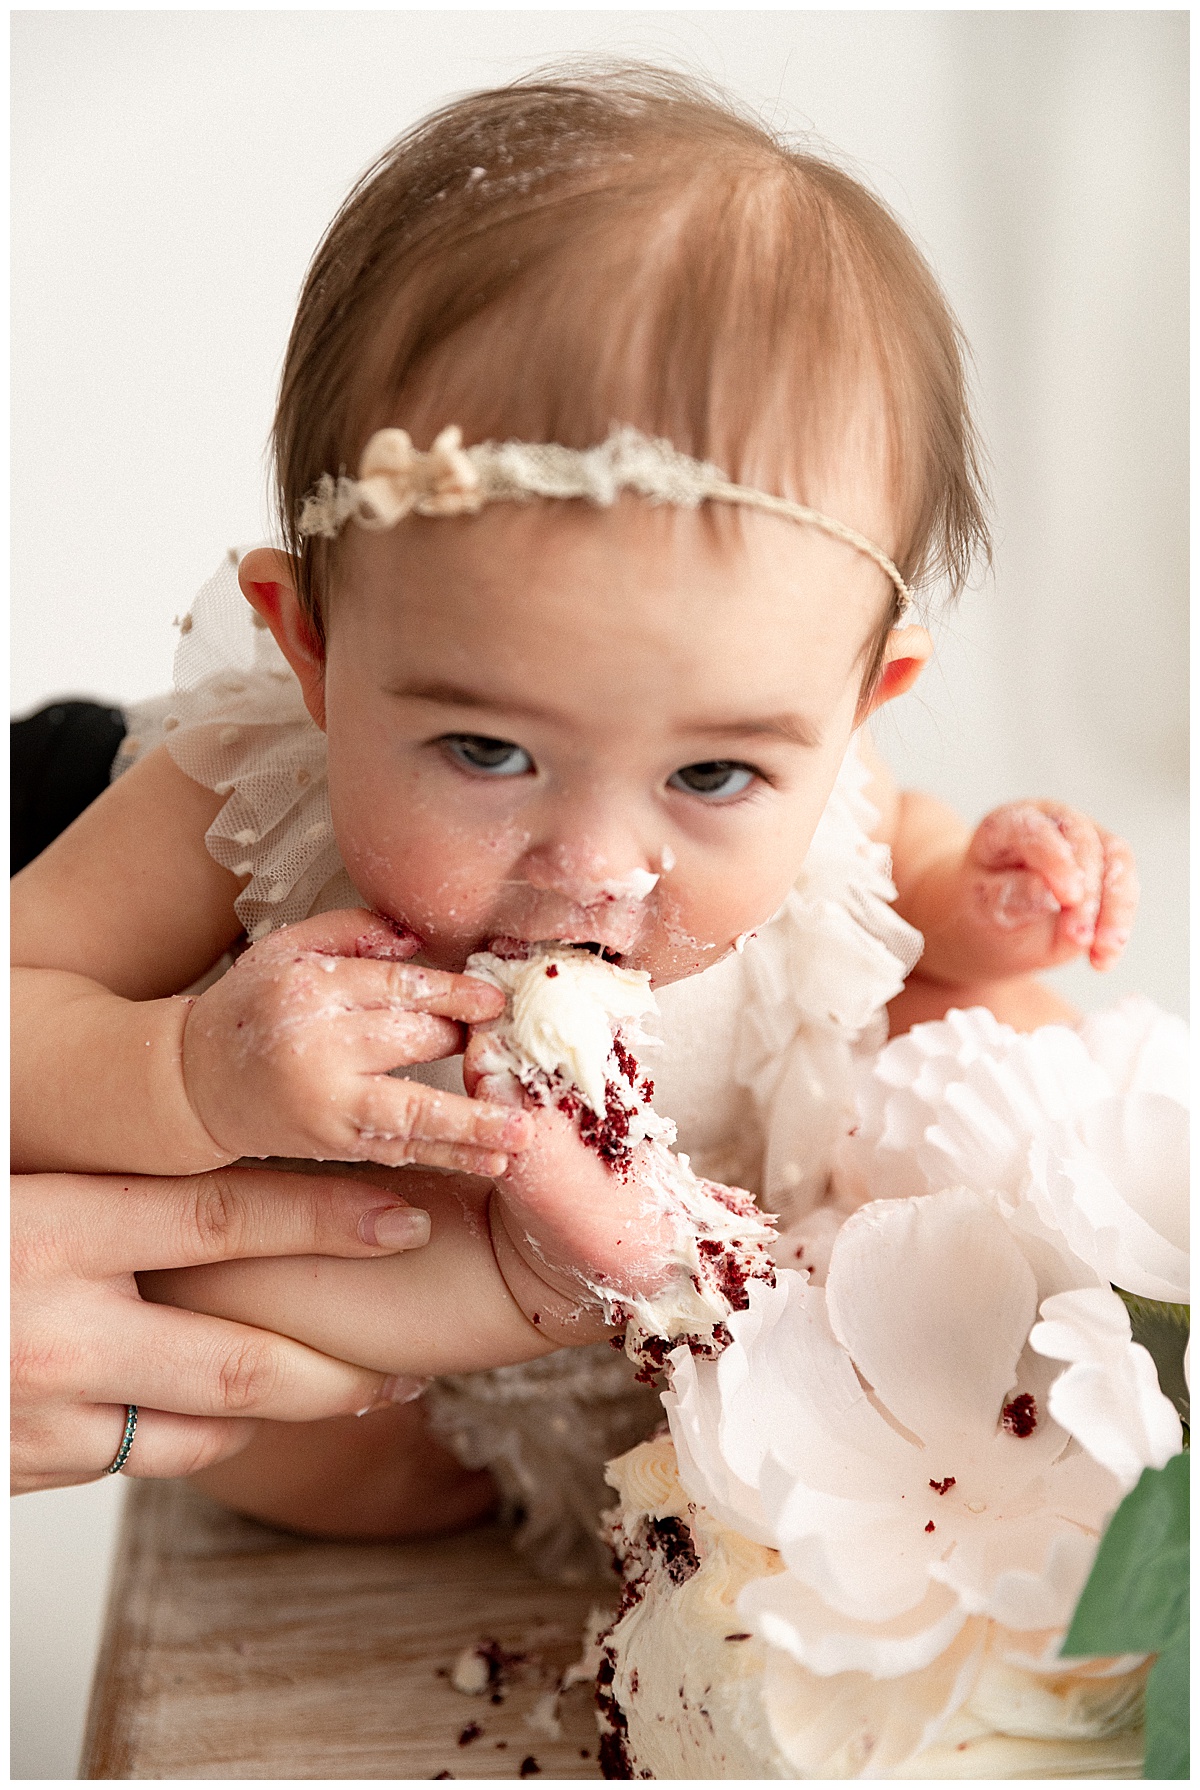 Little one eating cake off toe for Washington DC Baby Photographer